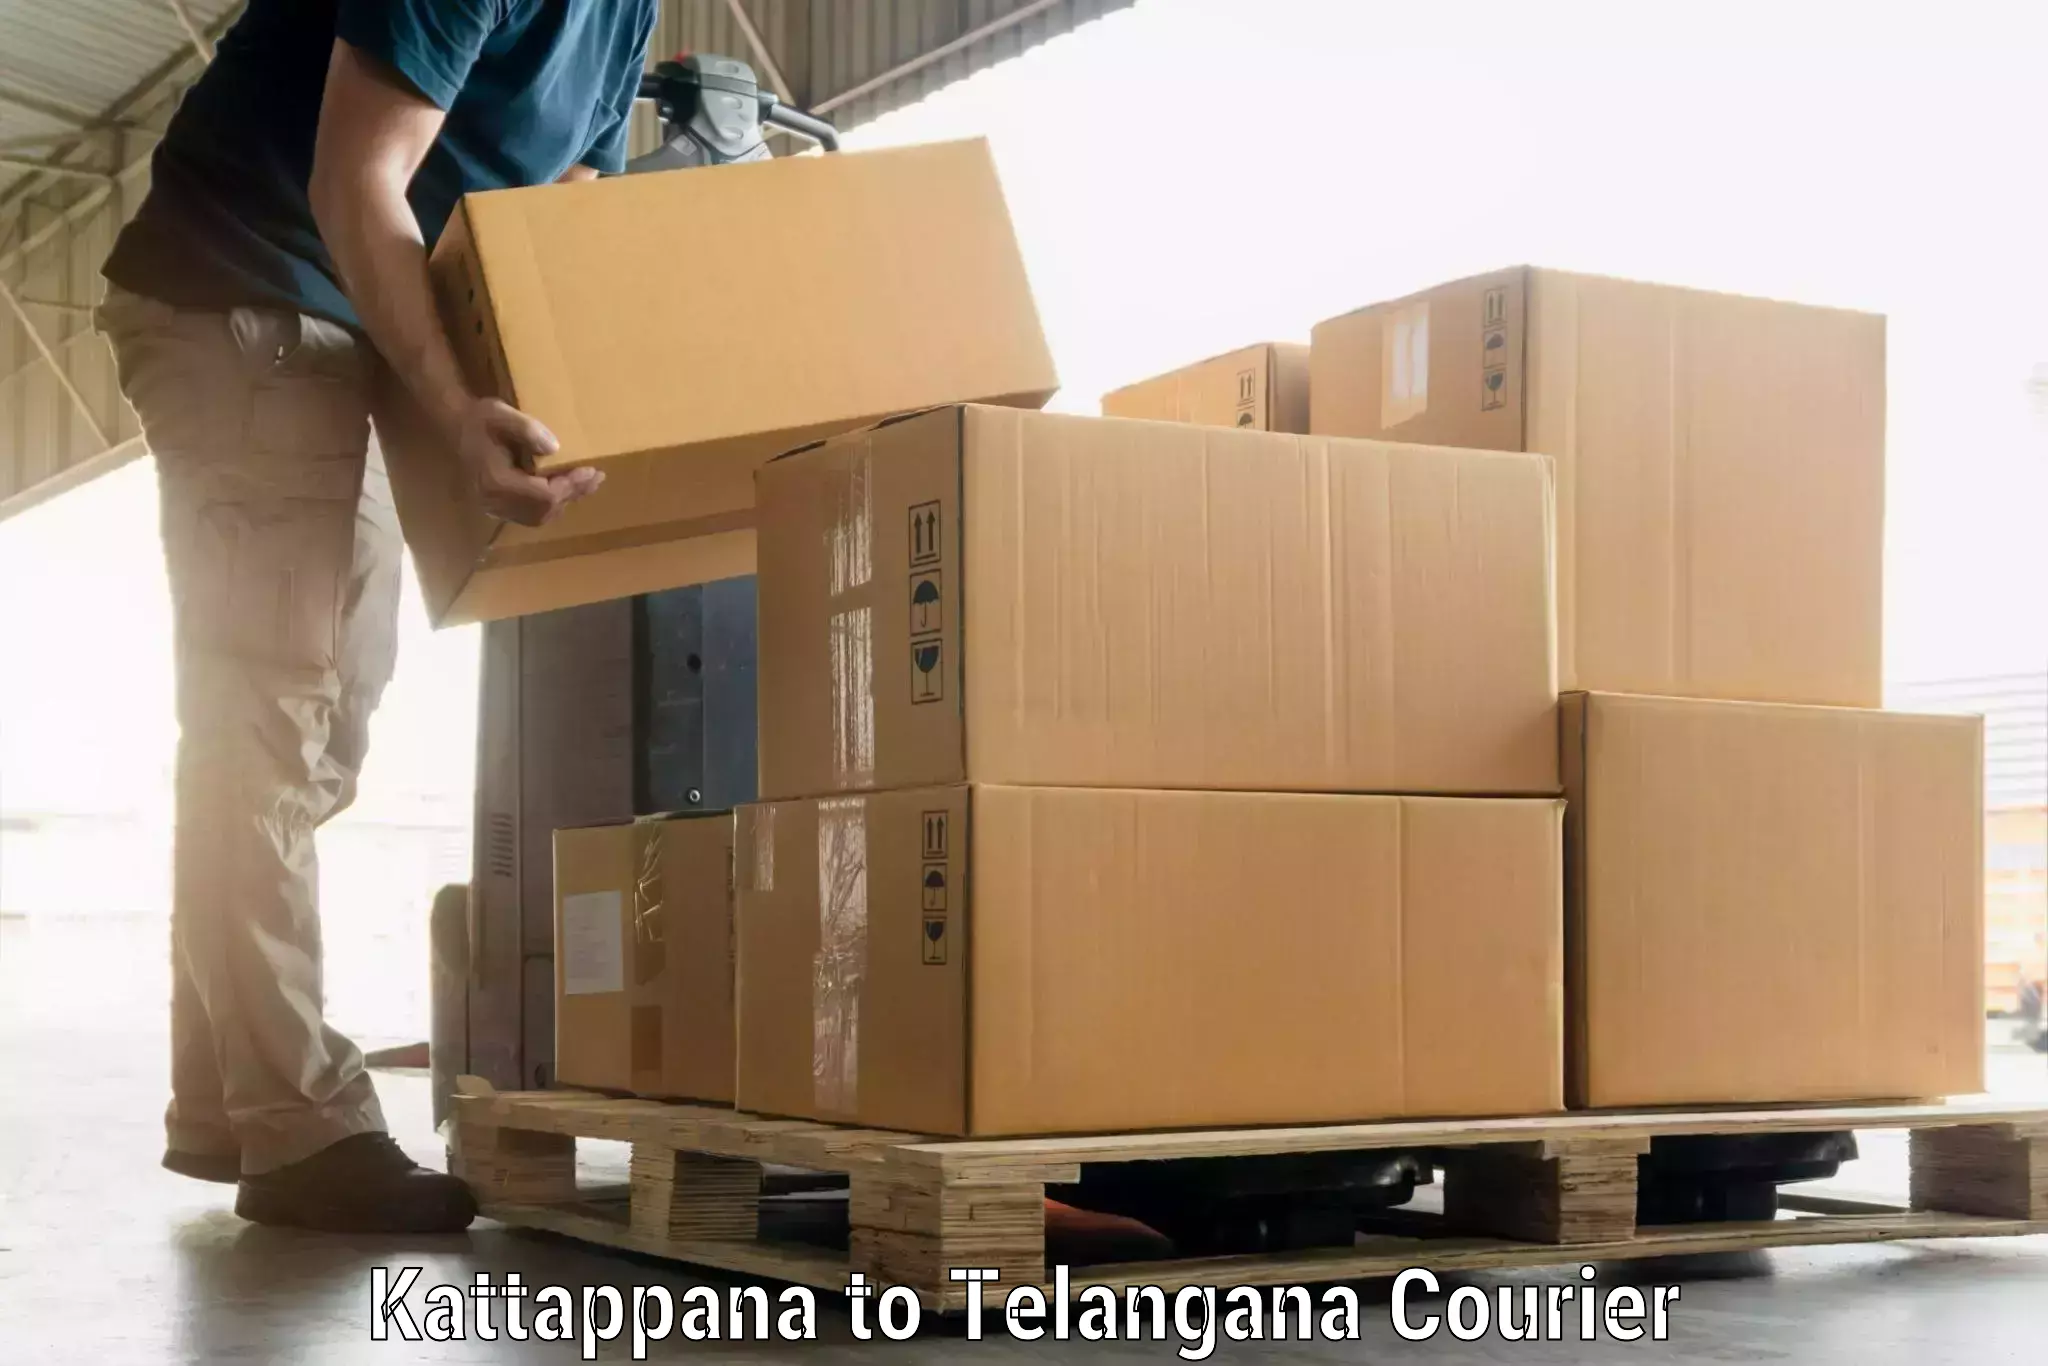 Door-to-door baggage service Kattappana to Gangadhara